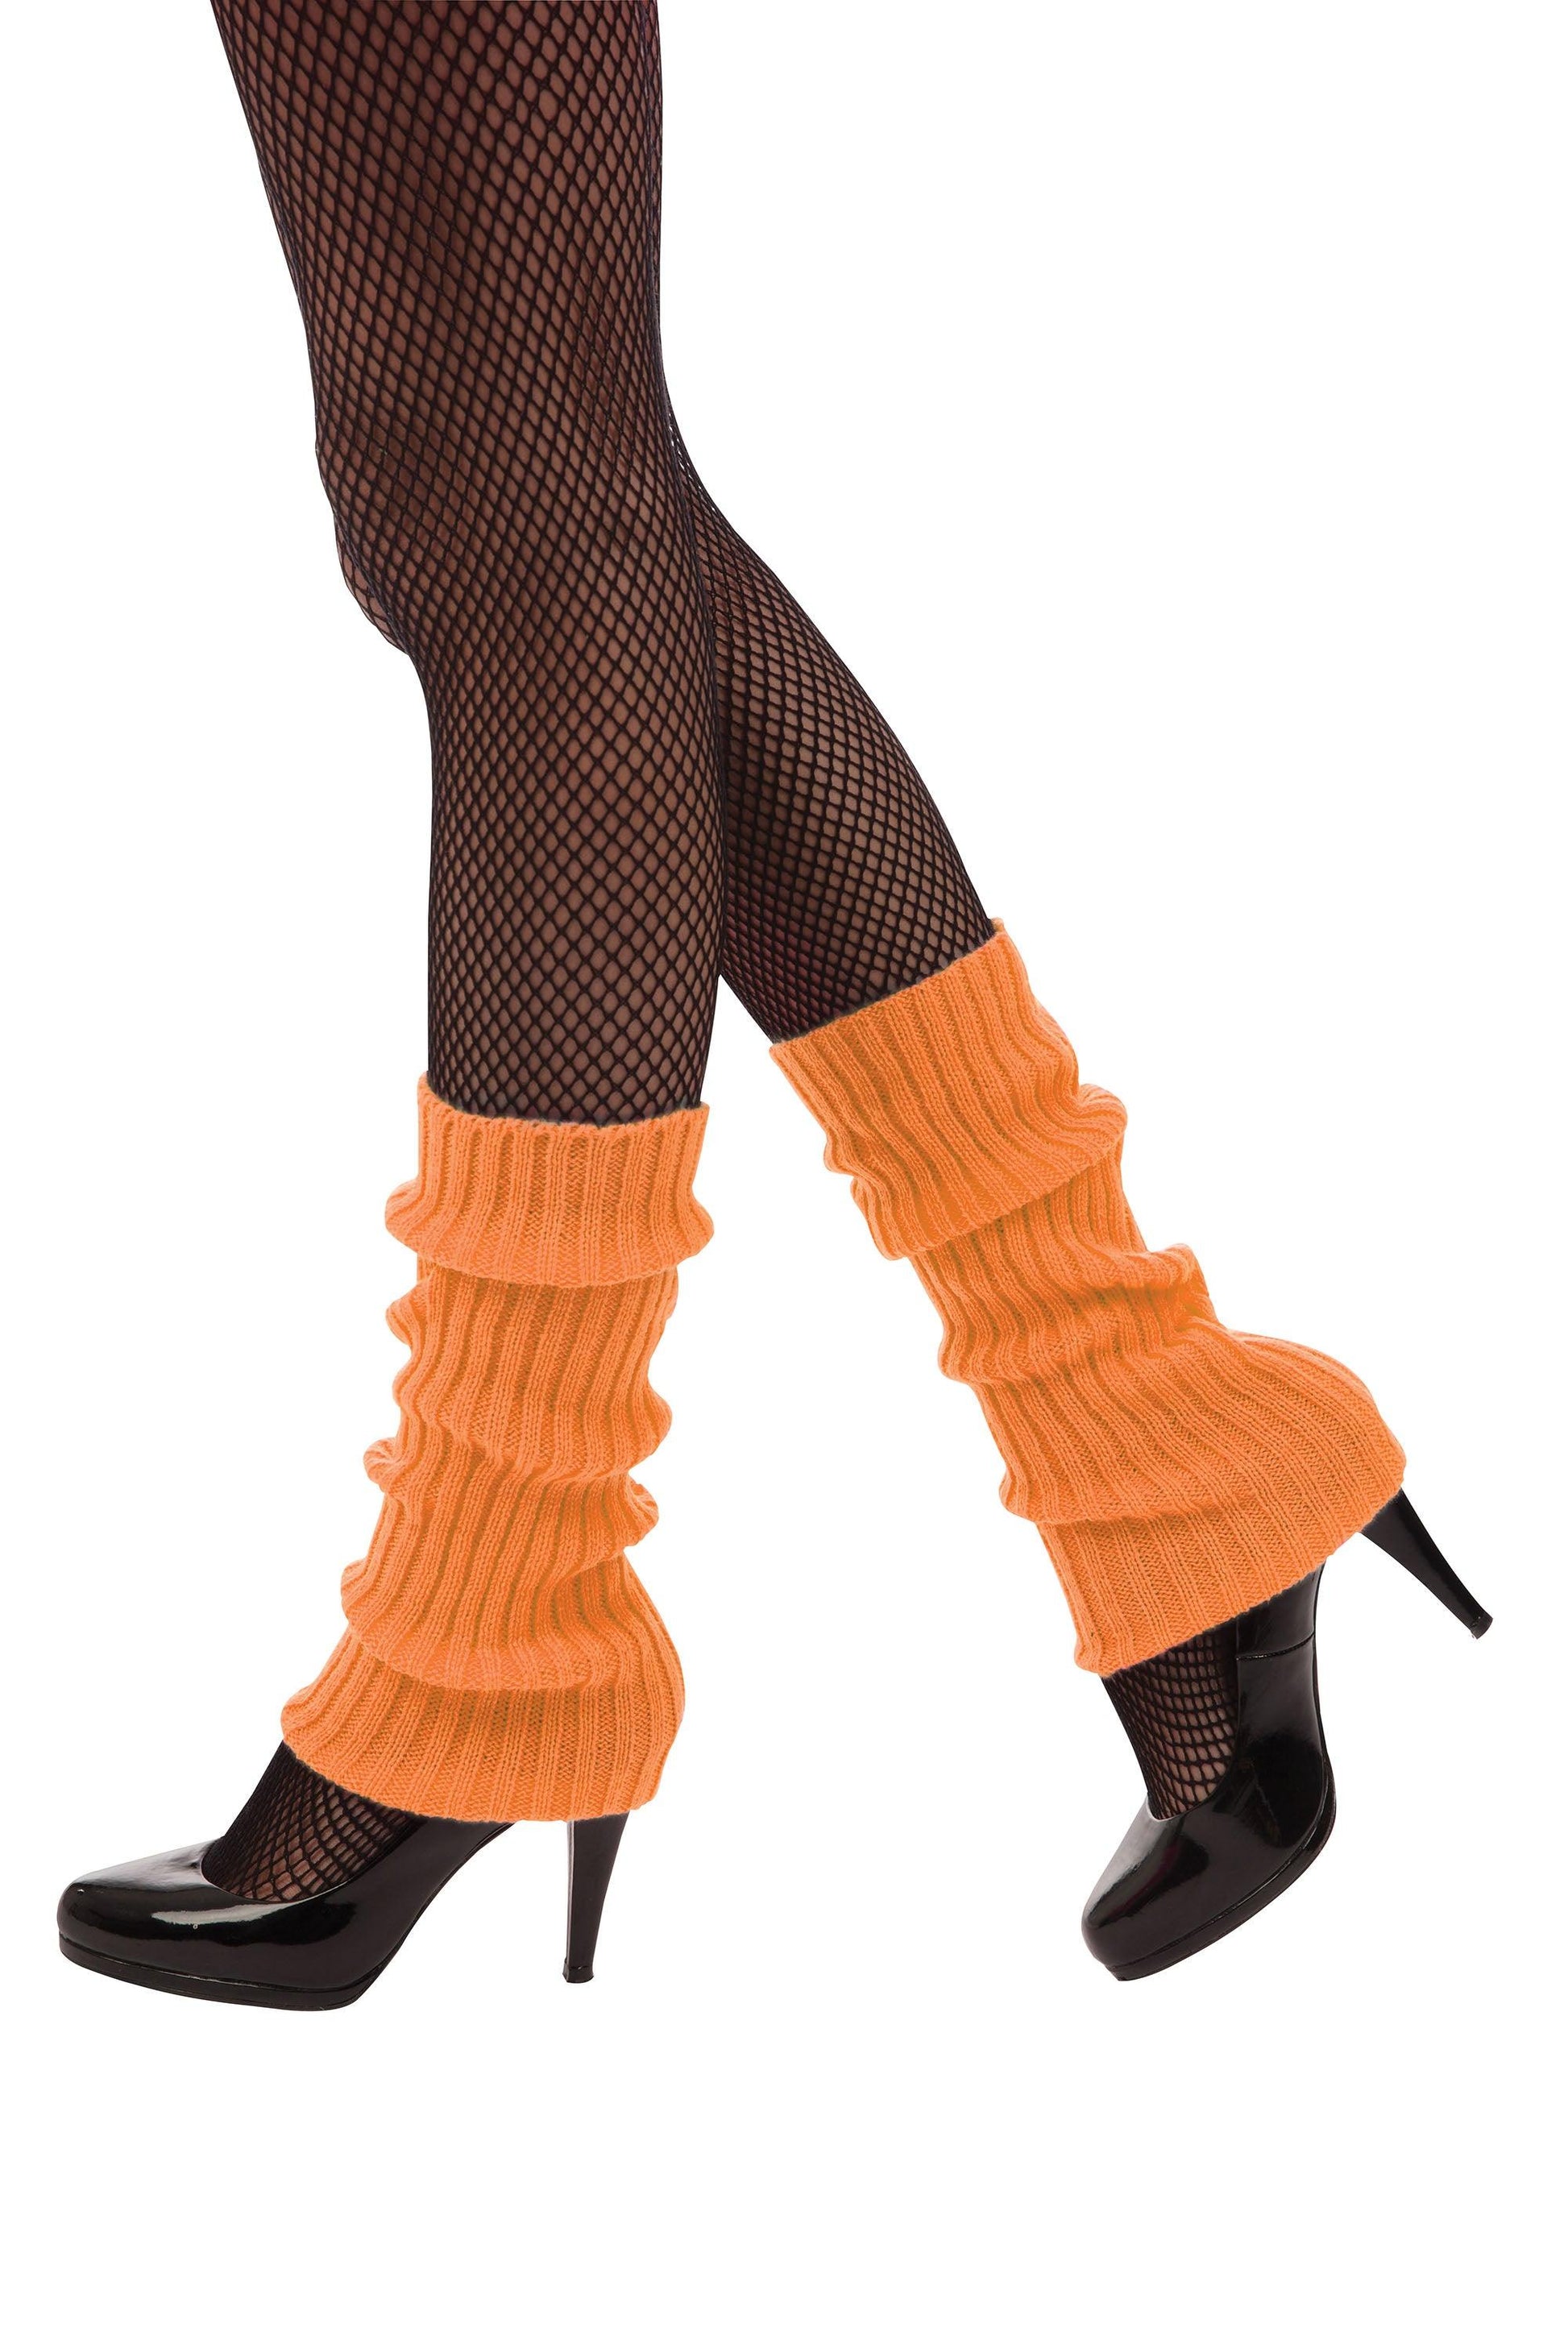 Leg Warmer Neon Orange - Labreeze